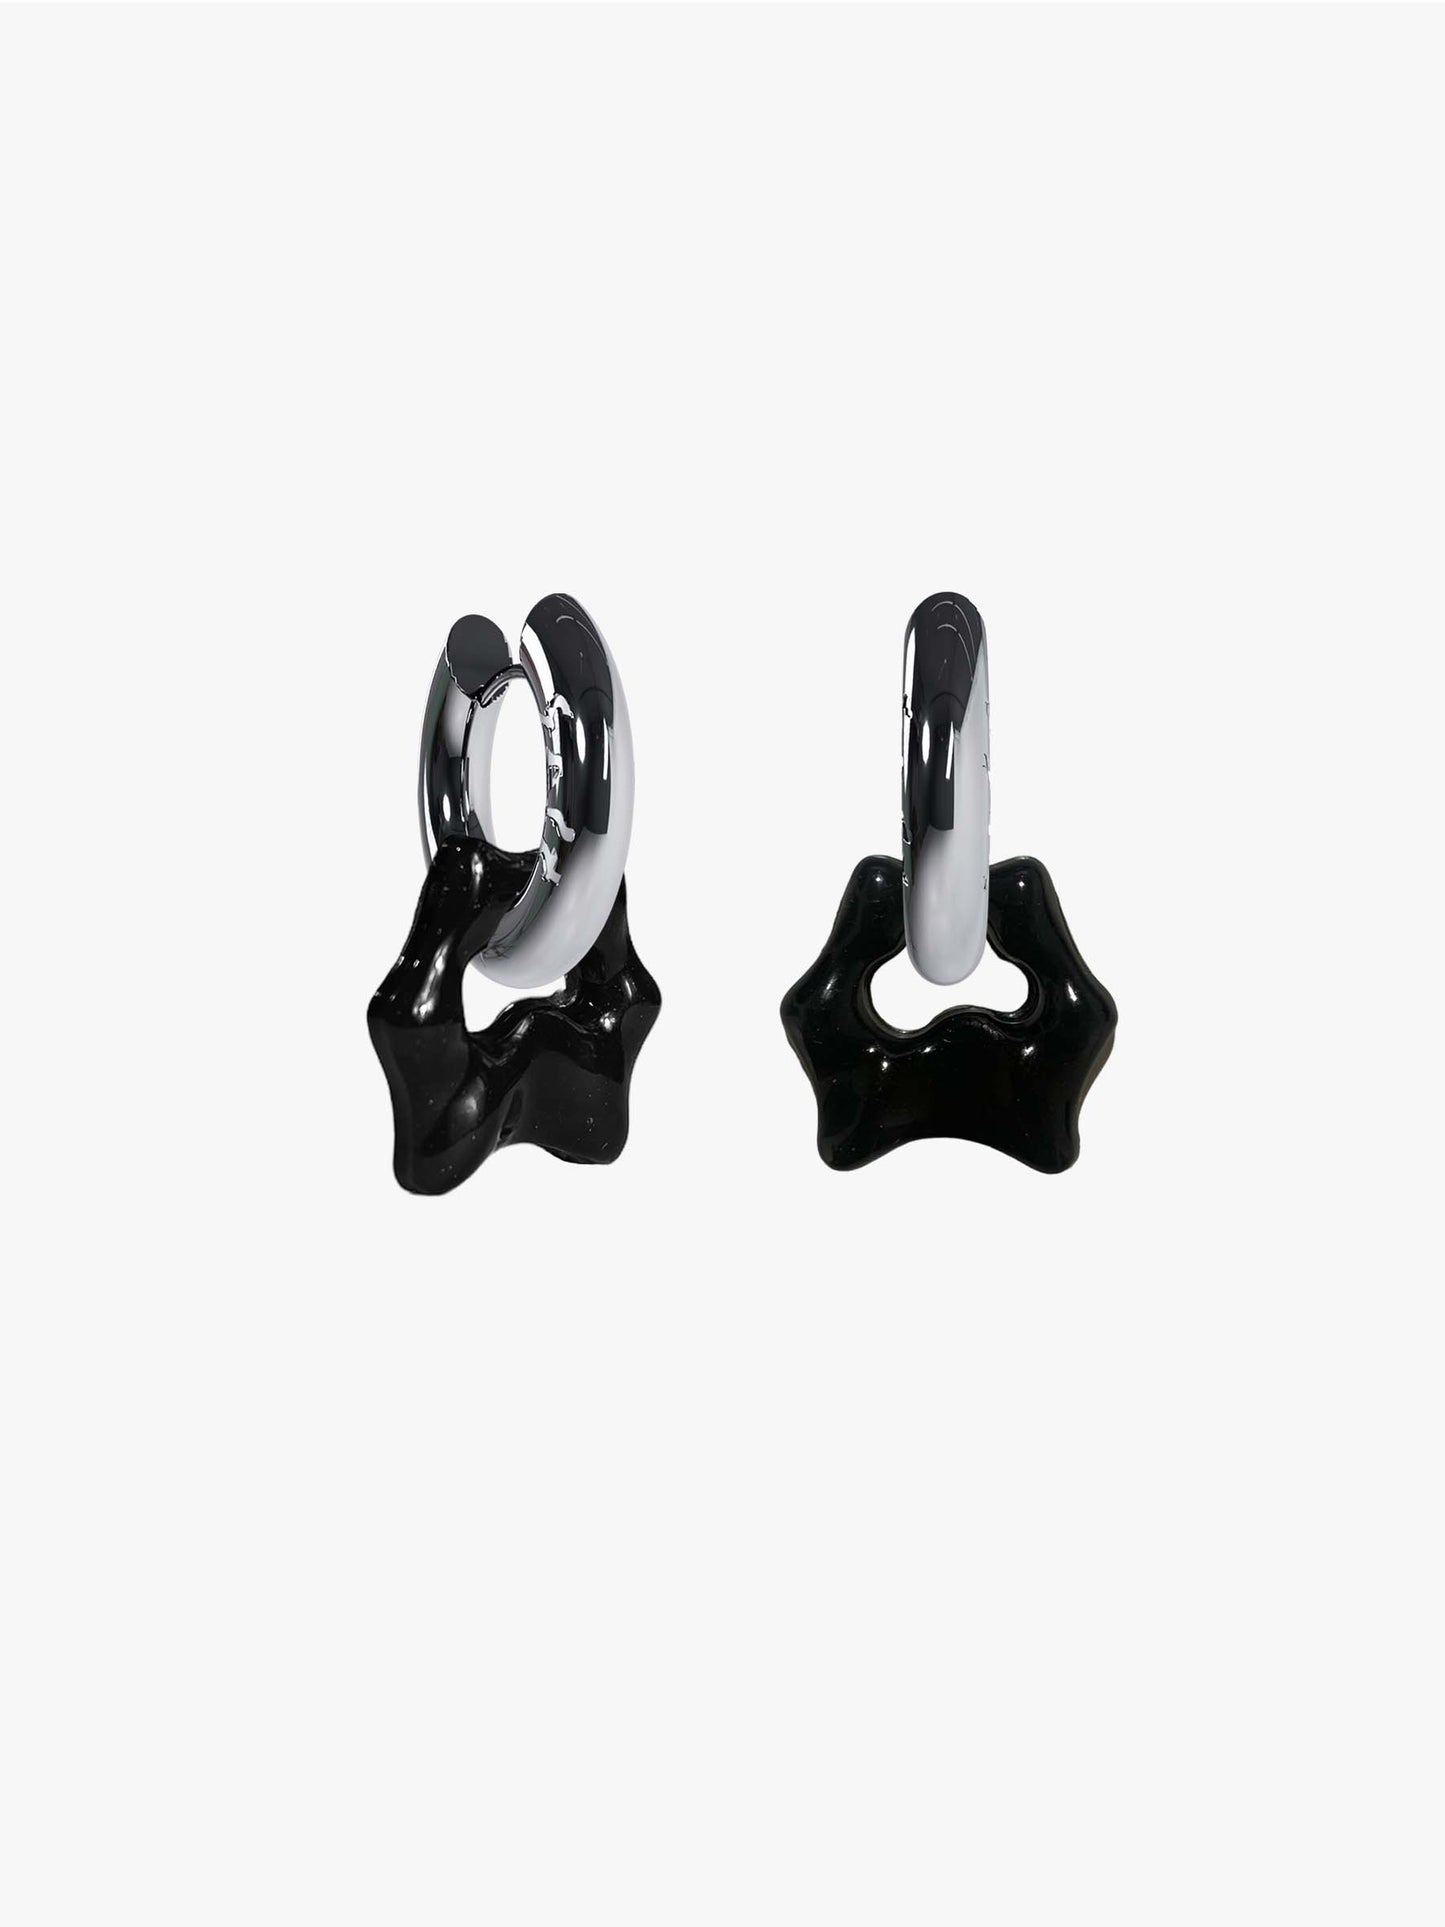 Tab Cuno black silver earring (pair)